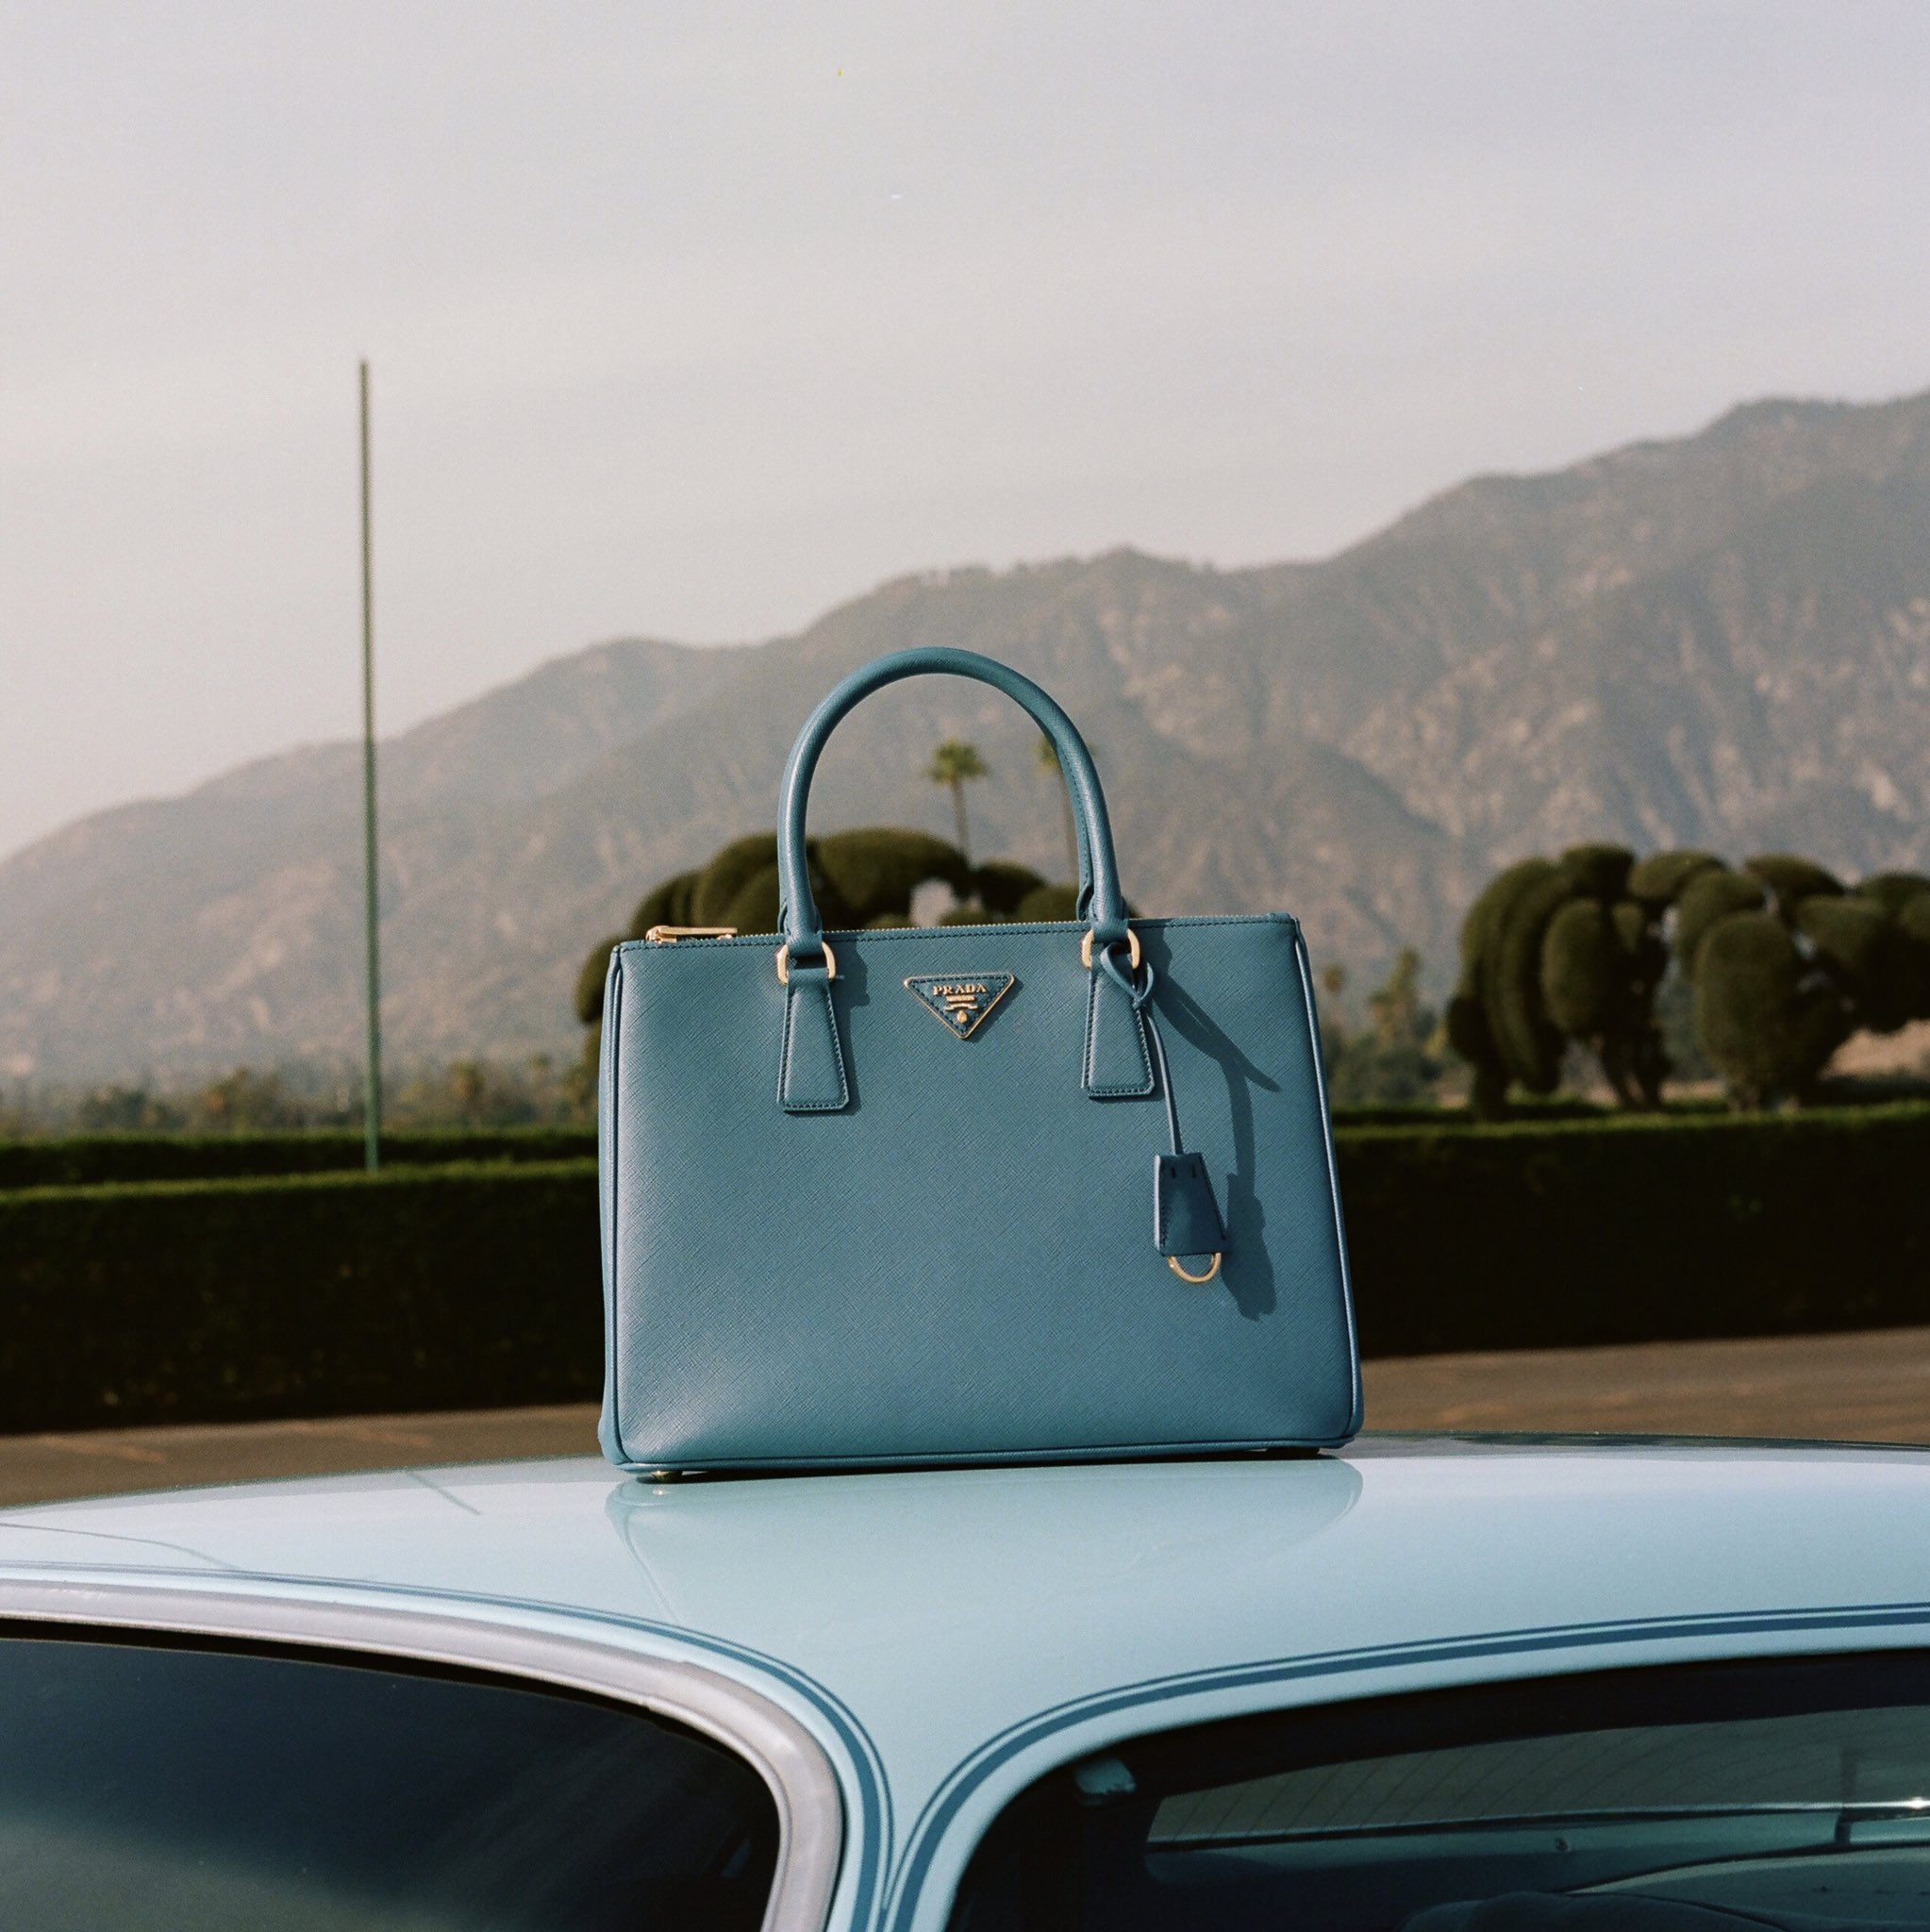 PRADA: Galleria bag in saffiano leather - Blue